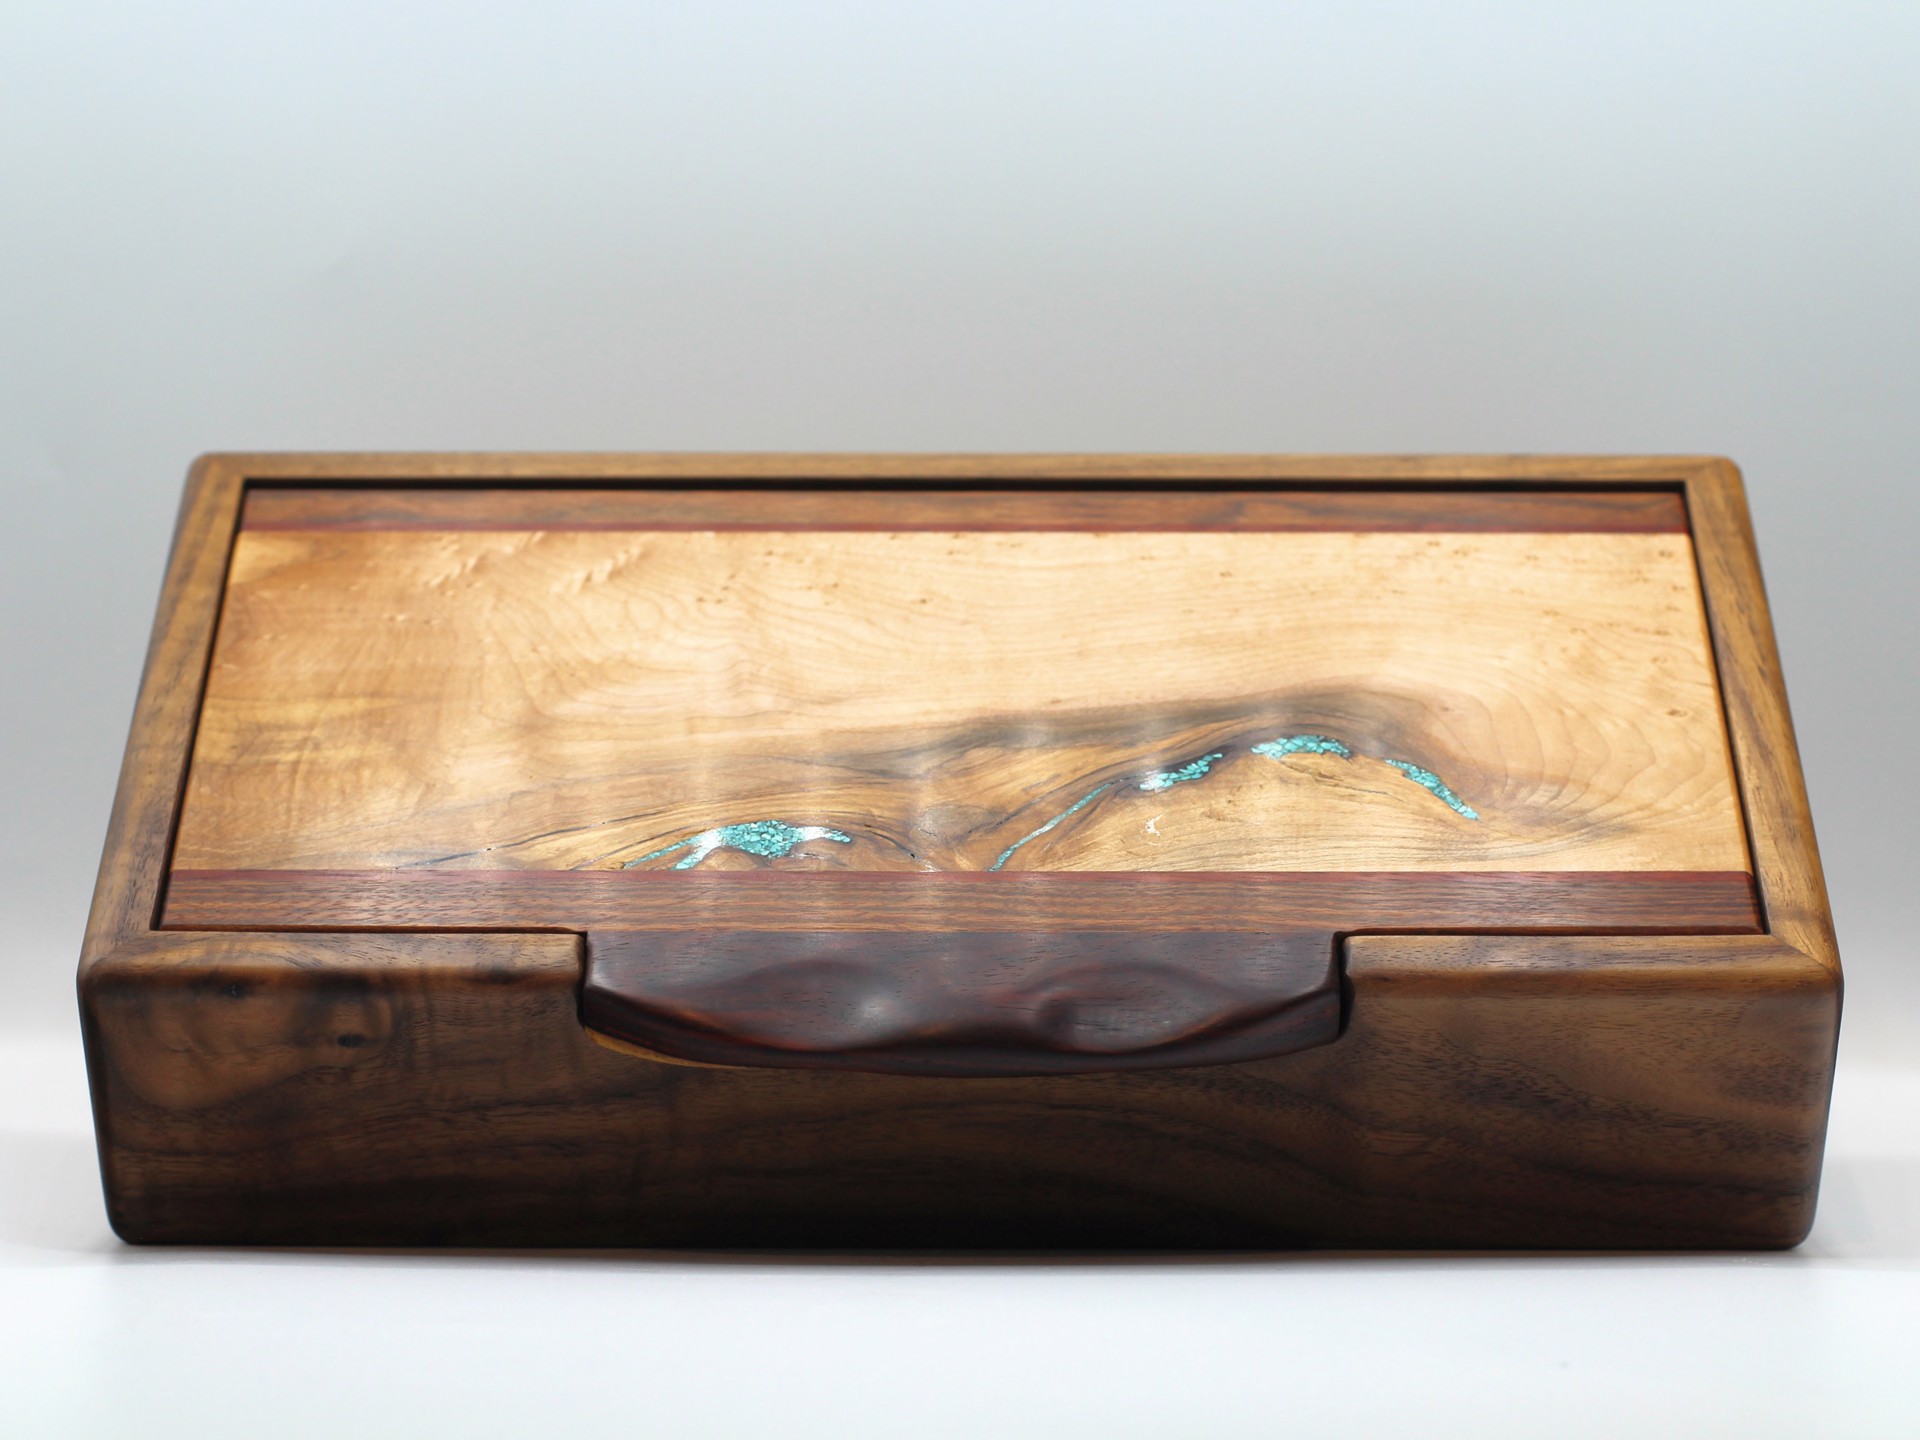 Medium Jewelry Box with Turquoise Inlay by Doug Thoeny